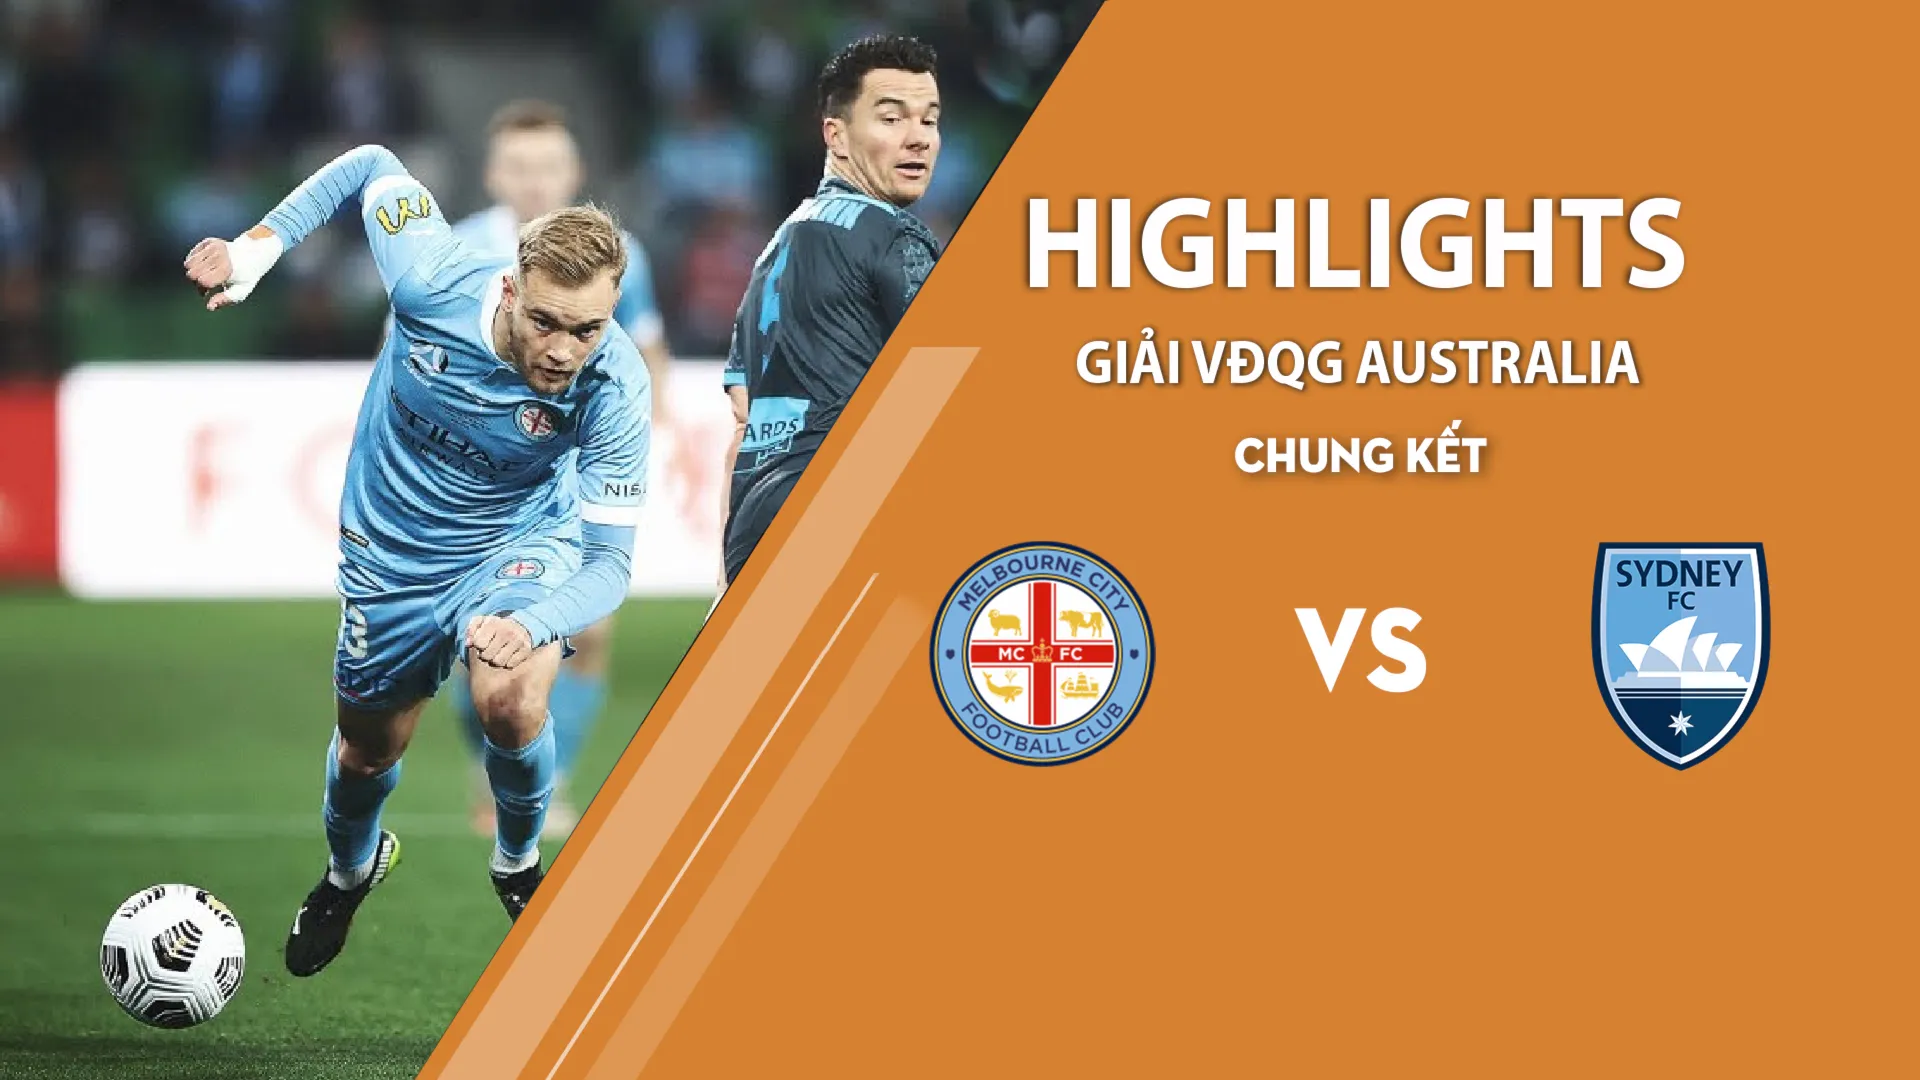 Highlights Melbourne City FC v Sydney FC (Chung kết giải A - League 2020/21)